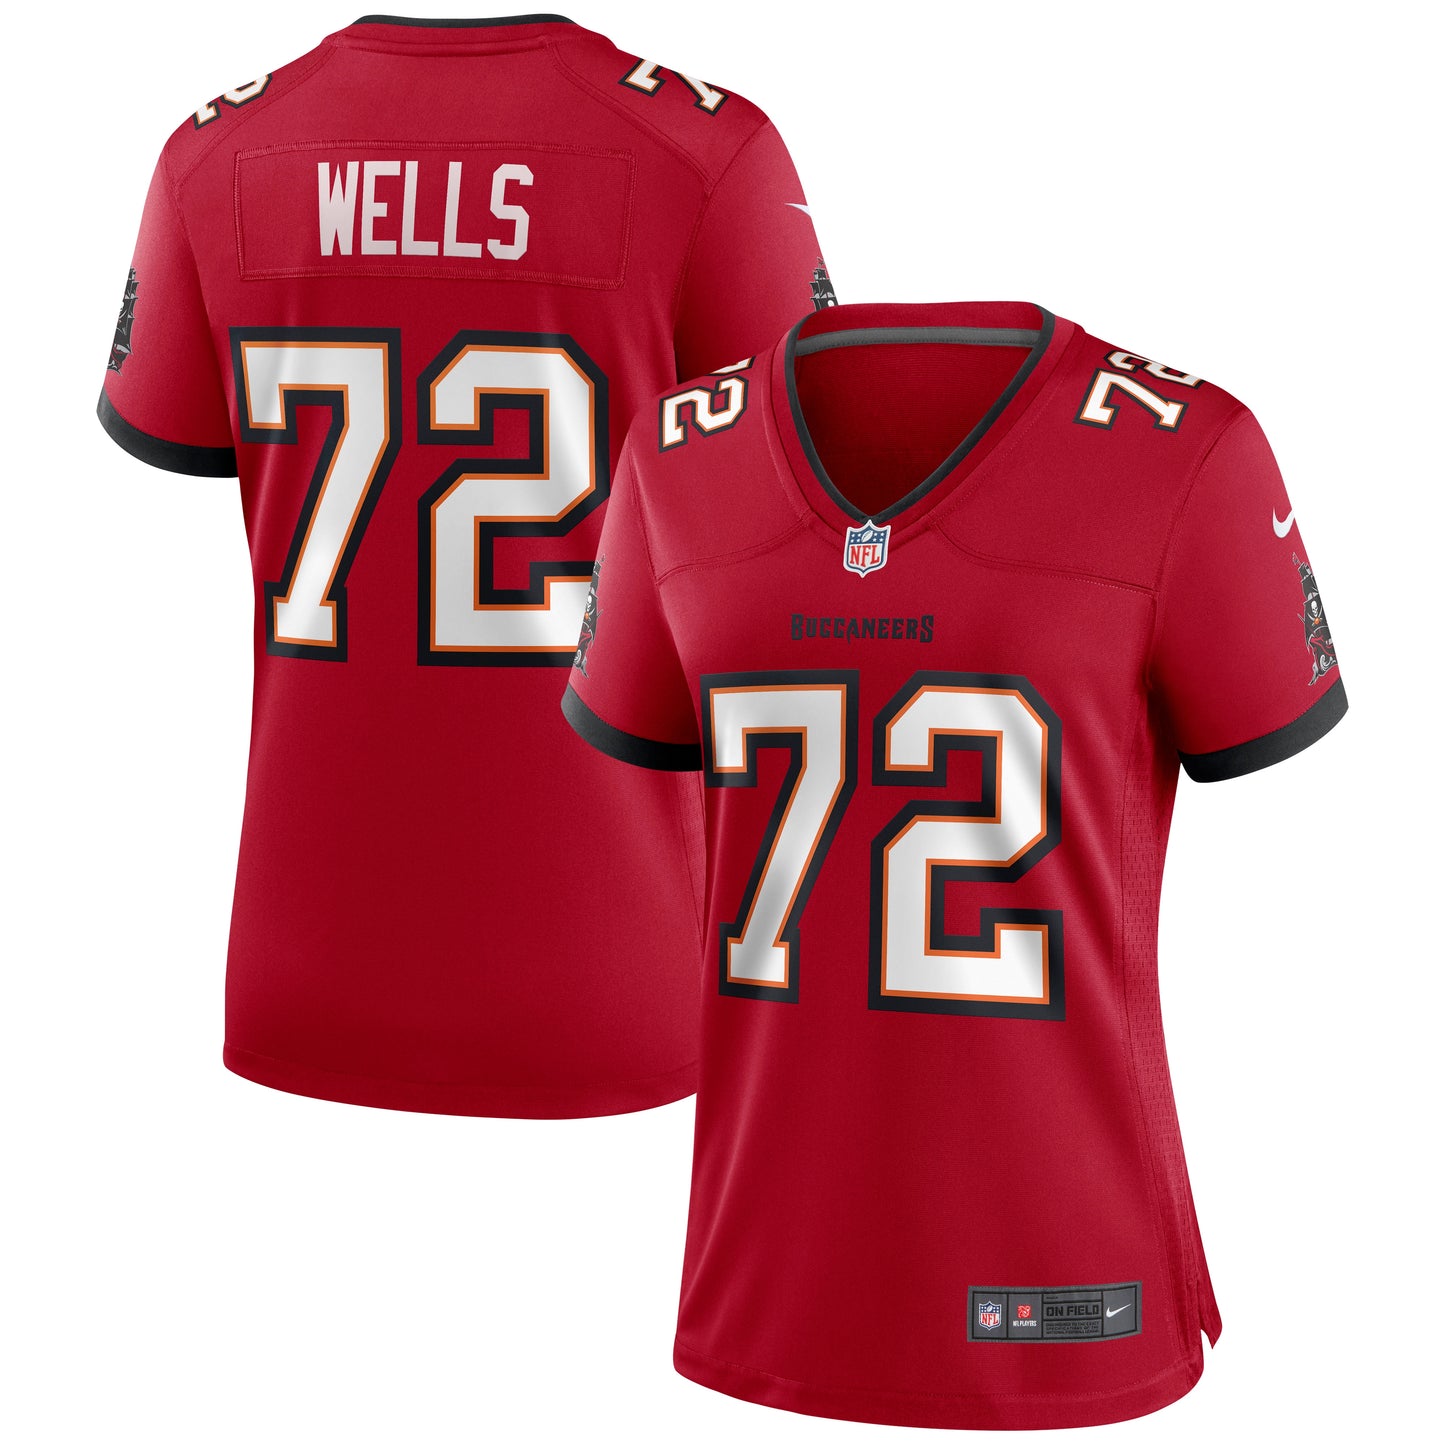 Josh Wells Tampa Bay Buccaneers Nike Women's Game Jersey - Red